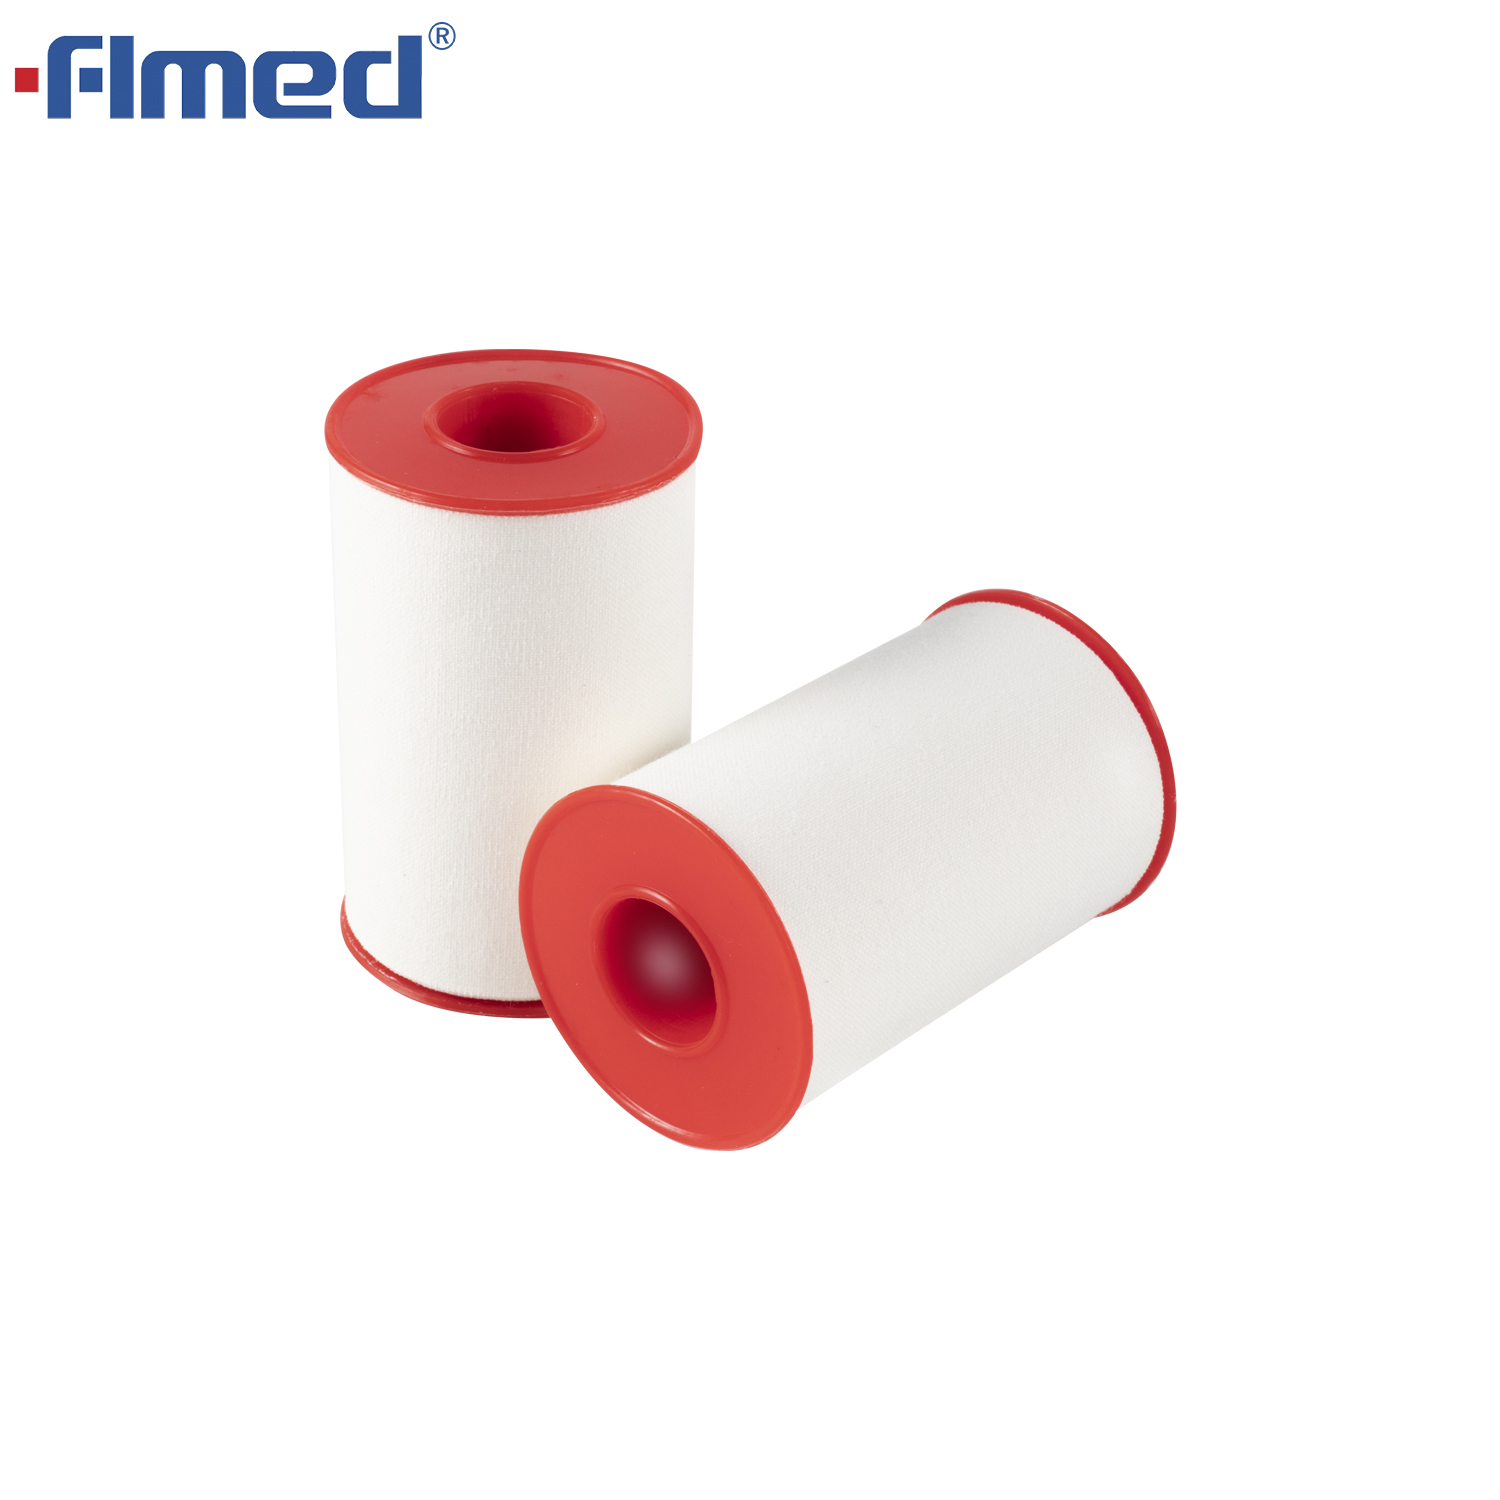 Adhesive Tape Zinc Oxide Tape 1.25cm X 5m